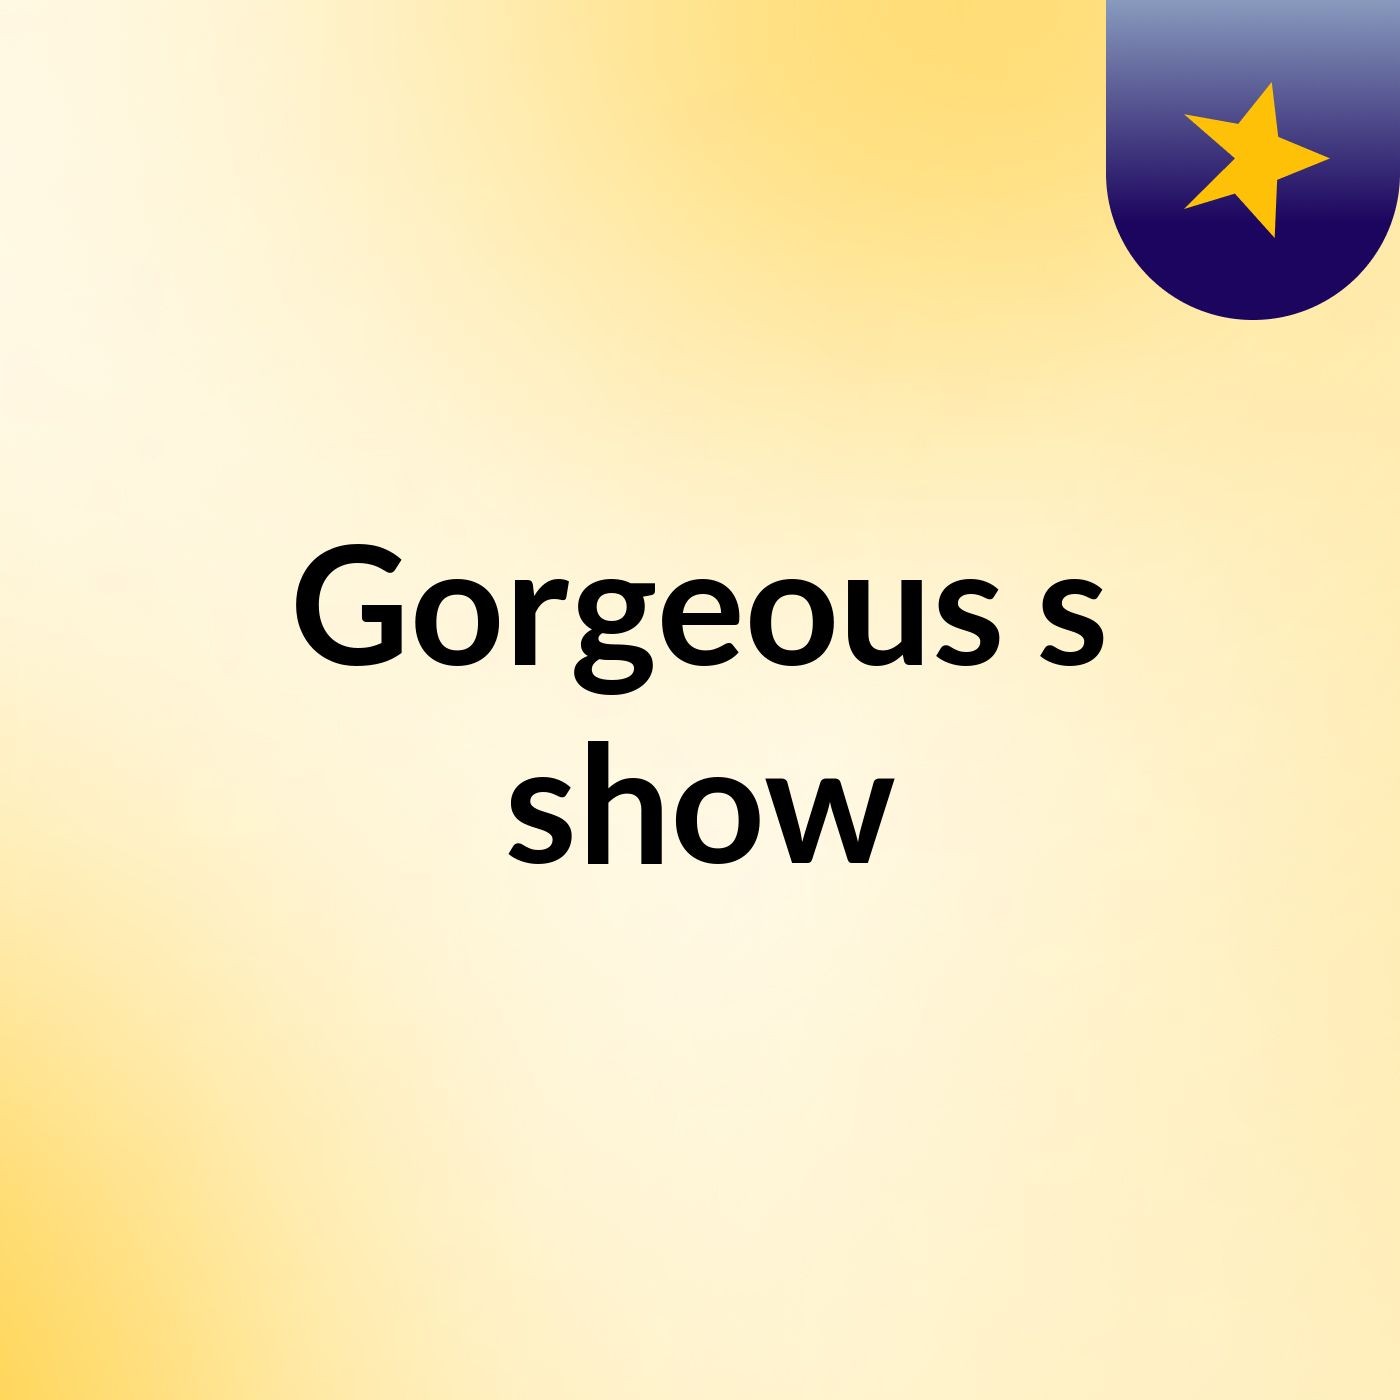 Gorgeous's show